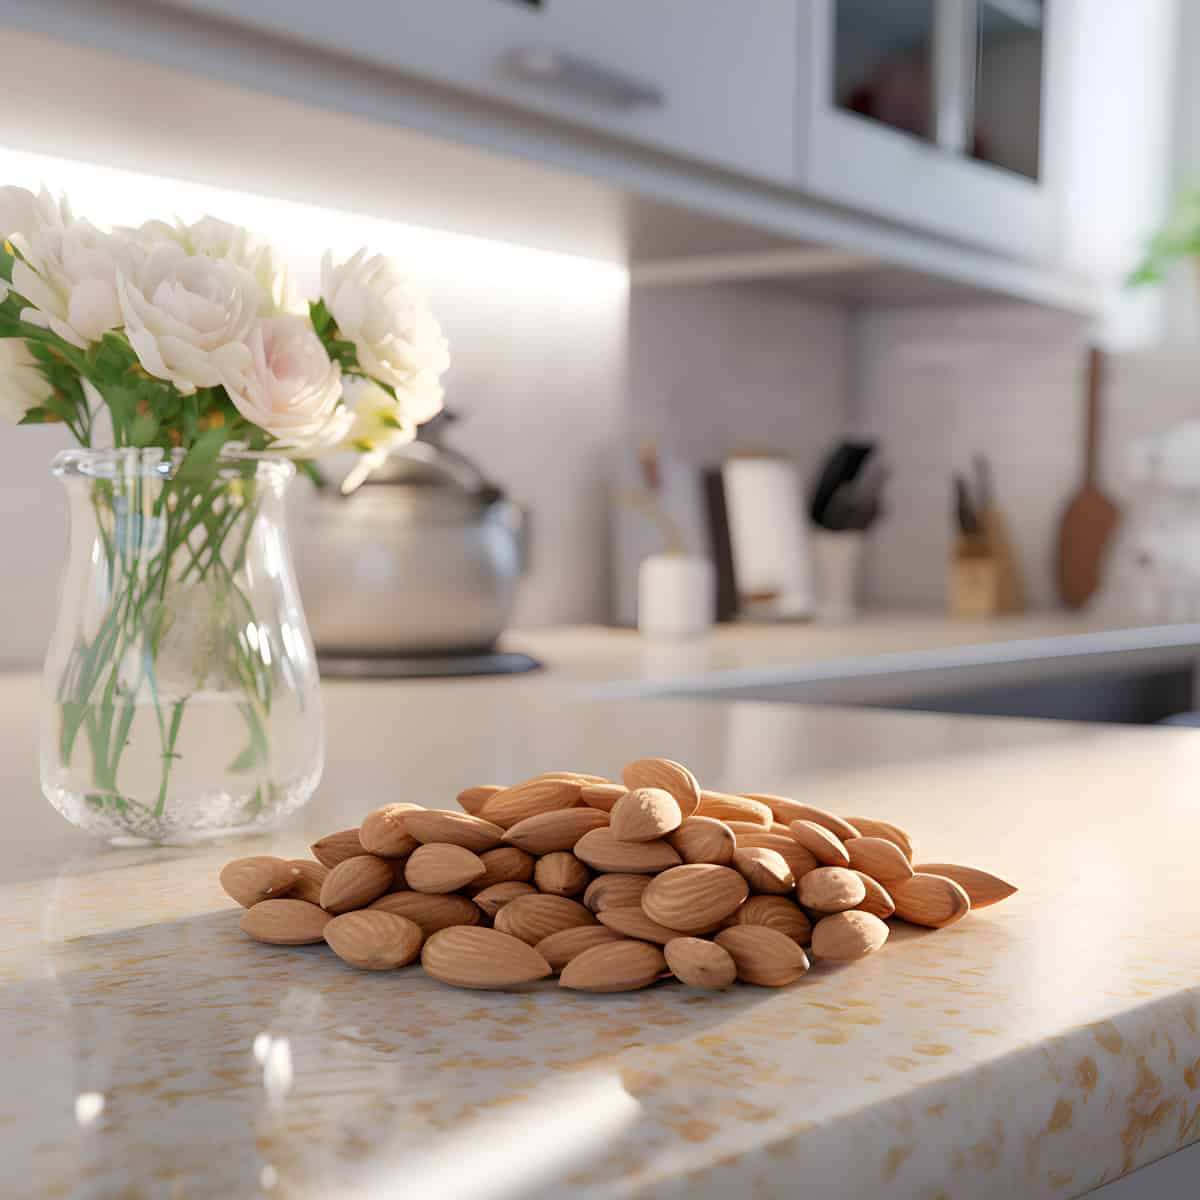 Desert Almonds on a kitchen counter